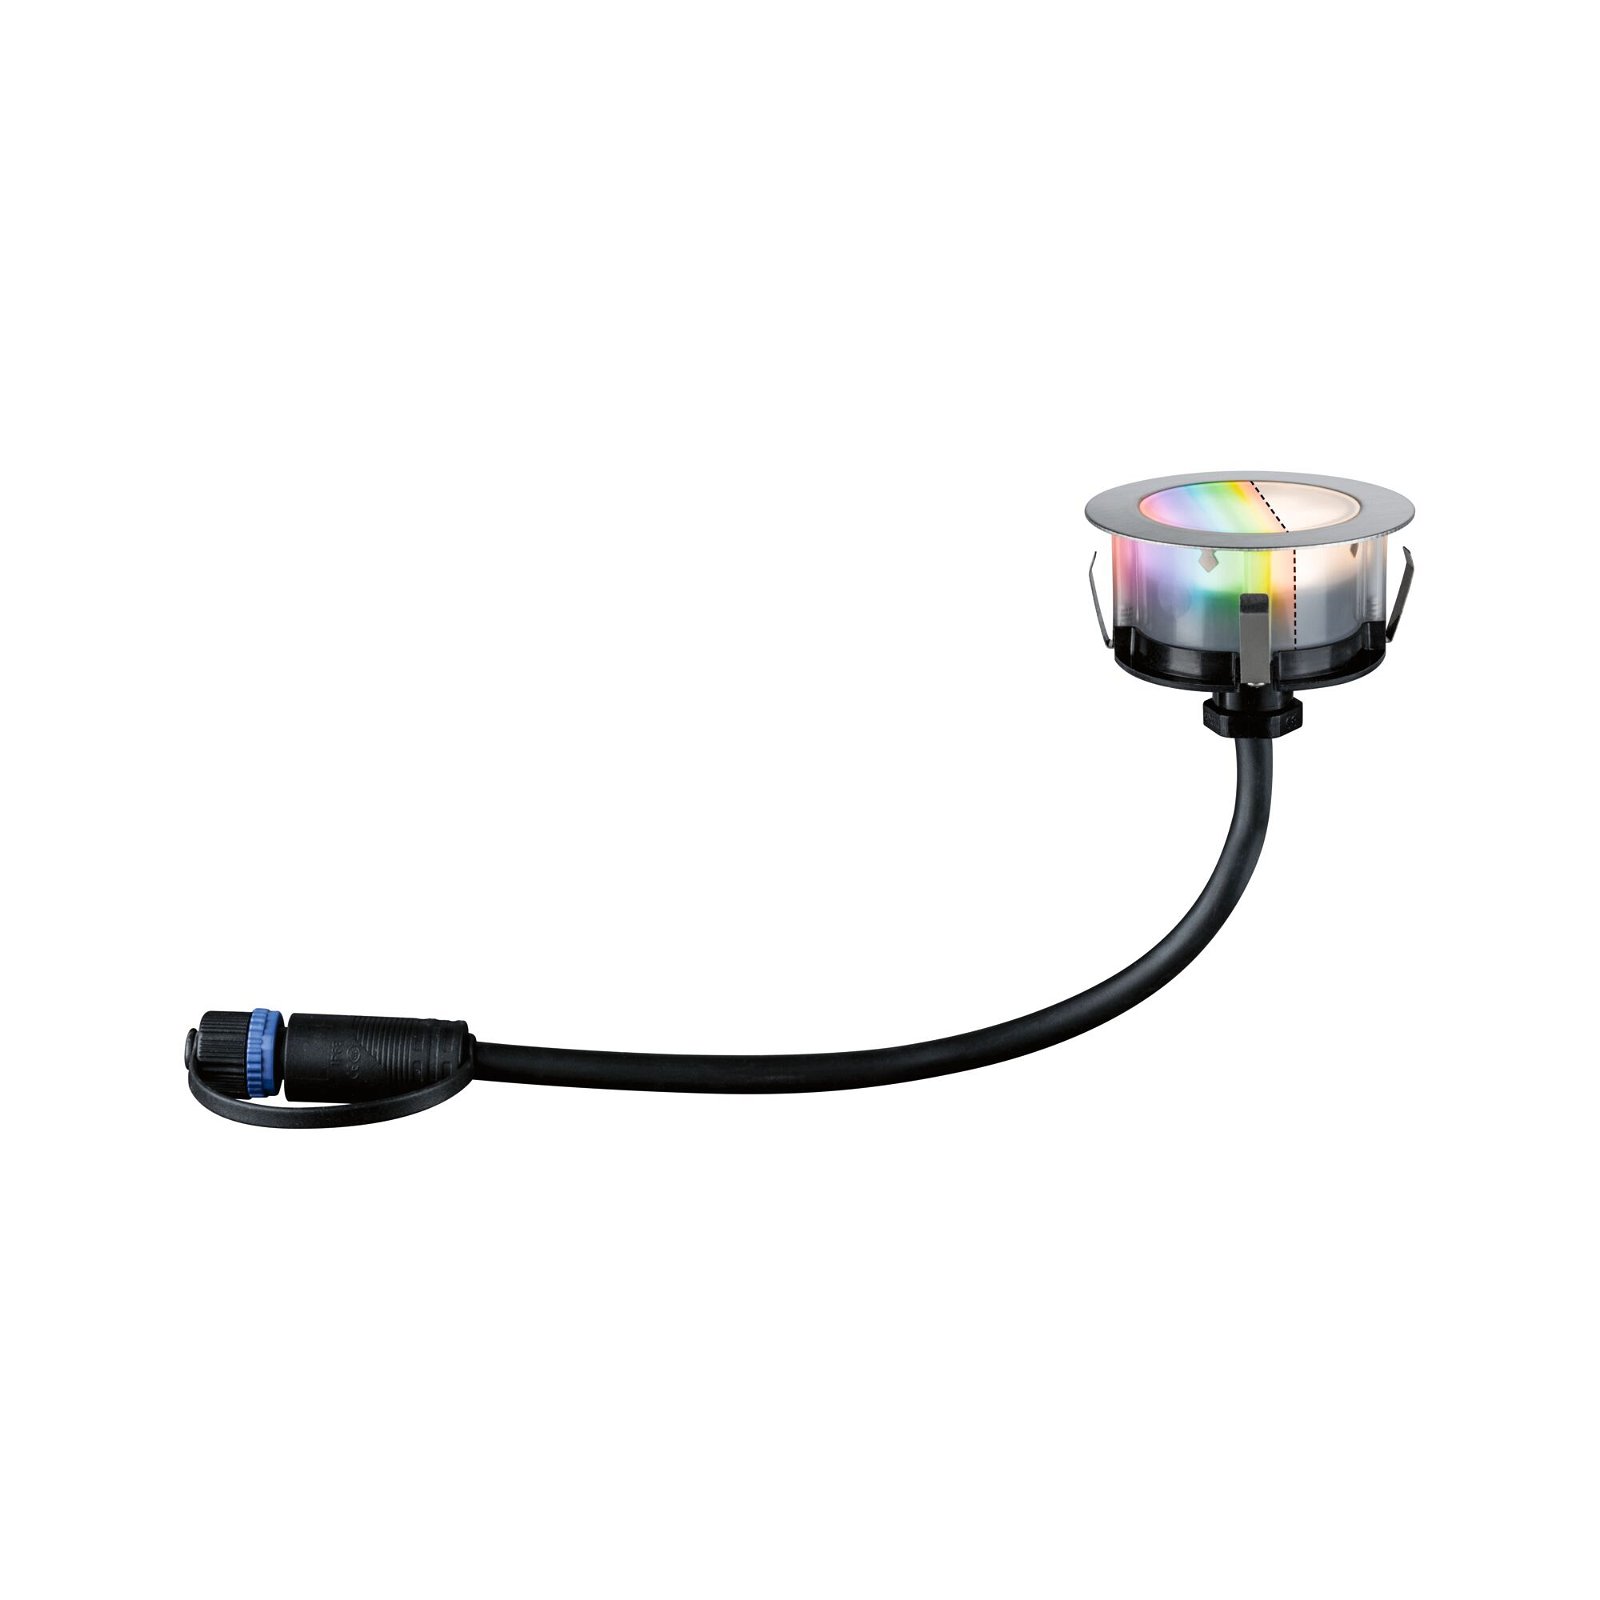 Plug & Shine LED-grondinbouwlamp Smart Home Zigbee Floor RGBW Set van 3 IP67 RGBW 3x2W 21VA Edelstaal